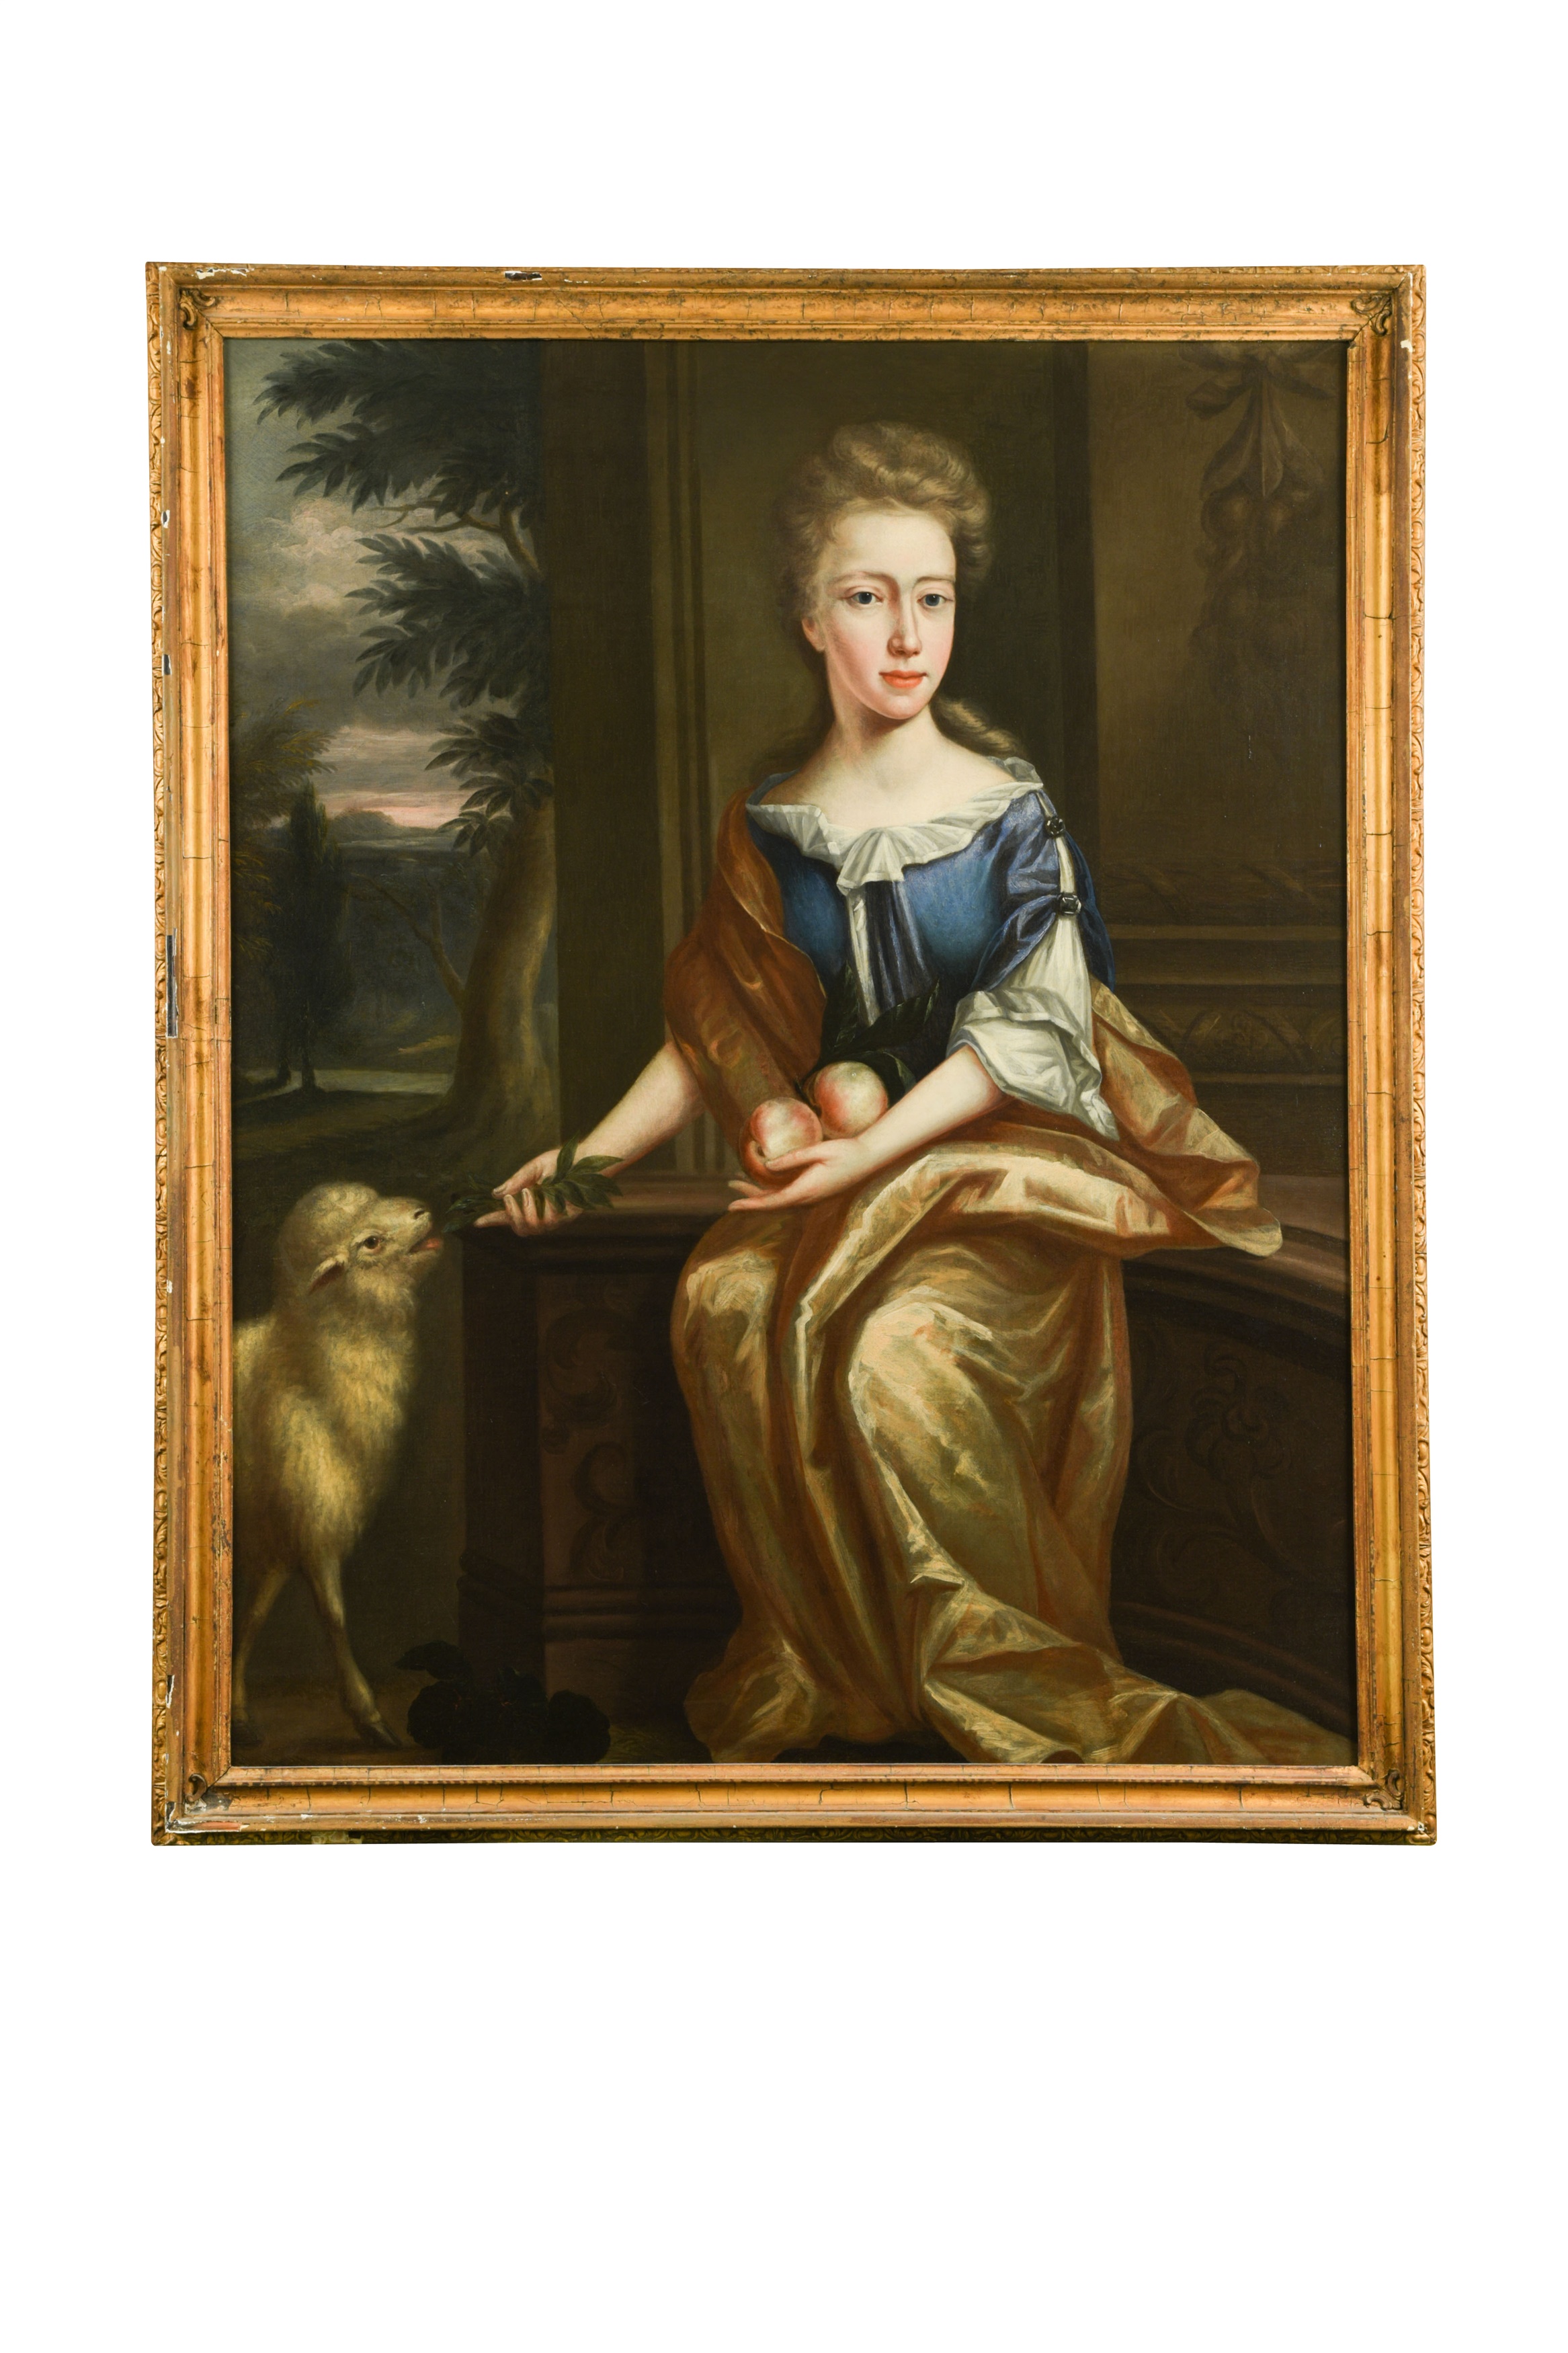 Attributed to John Baptiste de Medina (Flemish/Spanish 1659-1710) Portrait of a lady, believed to